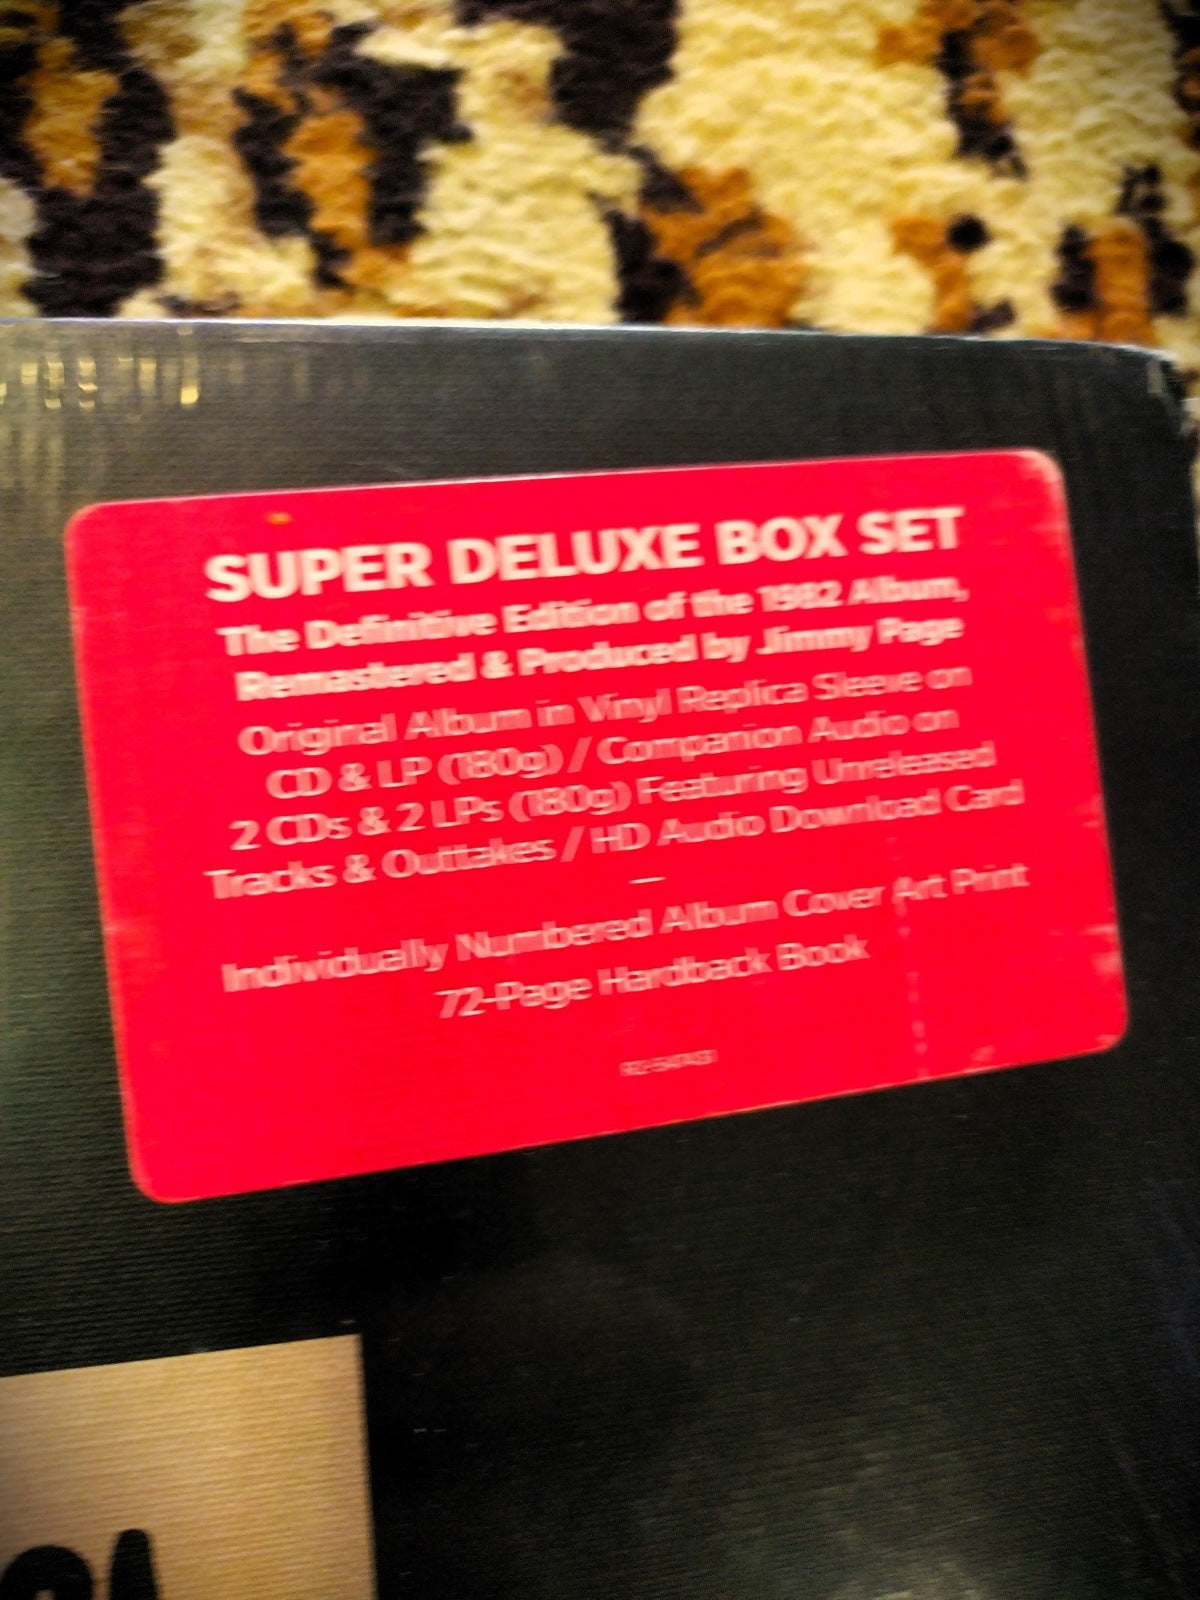 Led Zeppelin "Coda I" Super Deluxe Box Set - Unopened!